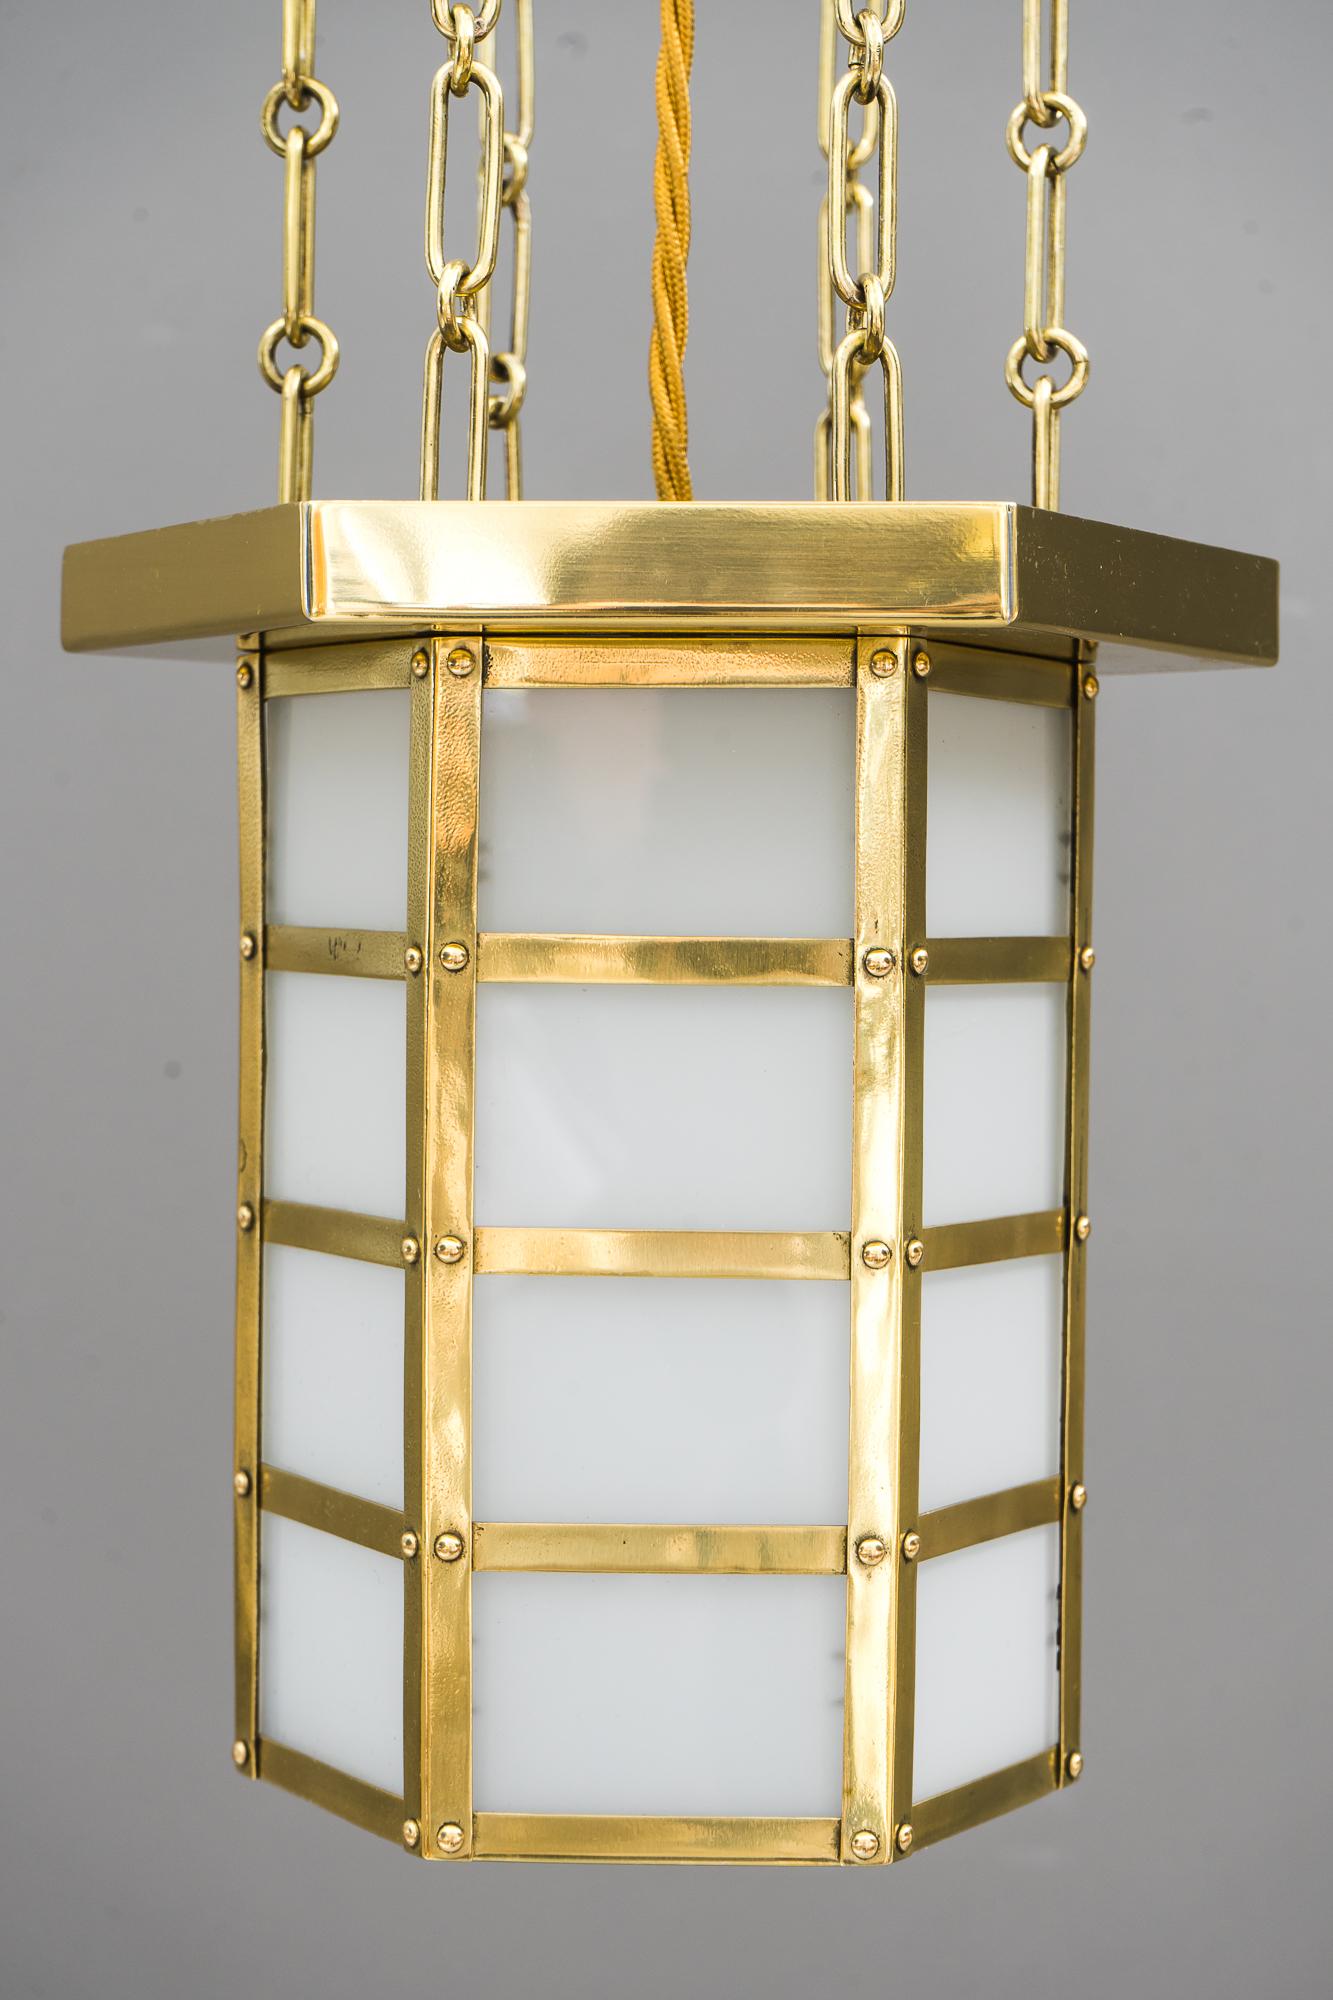 Art Deco pendant, Vienna, circa 1920s
Brass polished and stove enameled
Original opal glasses.